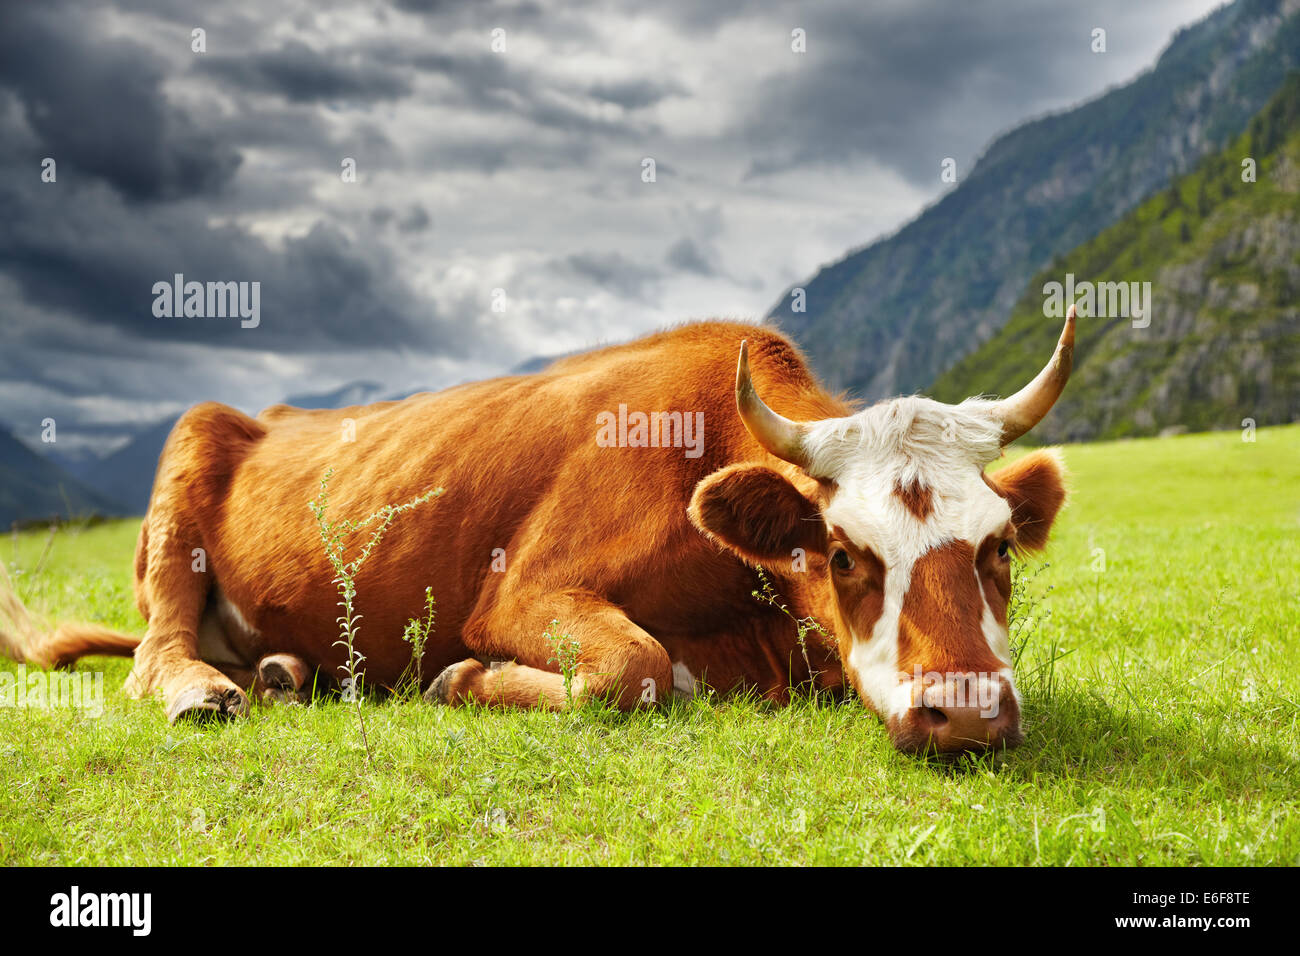 Meditative cow on the mountain pasture Stock Photo